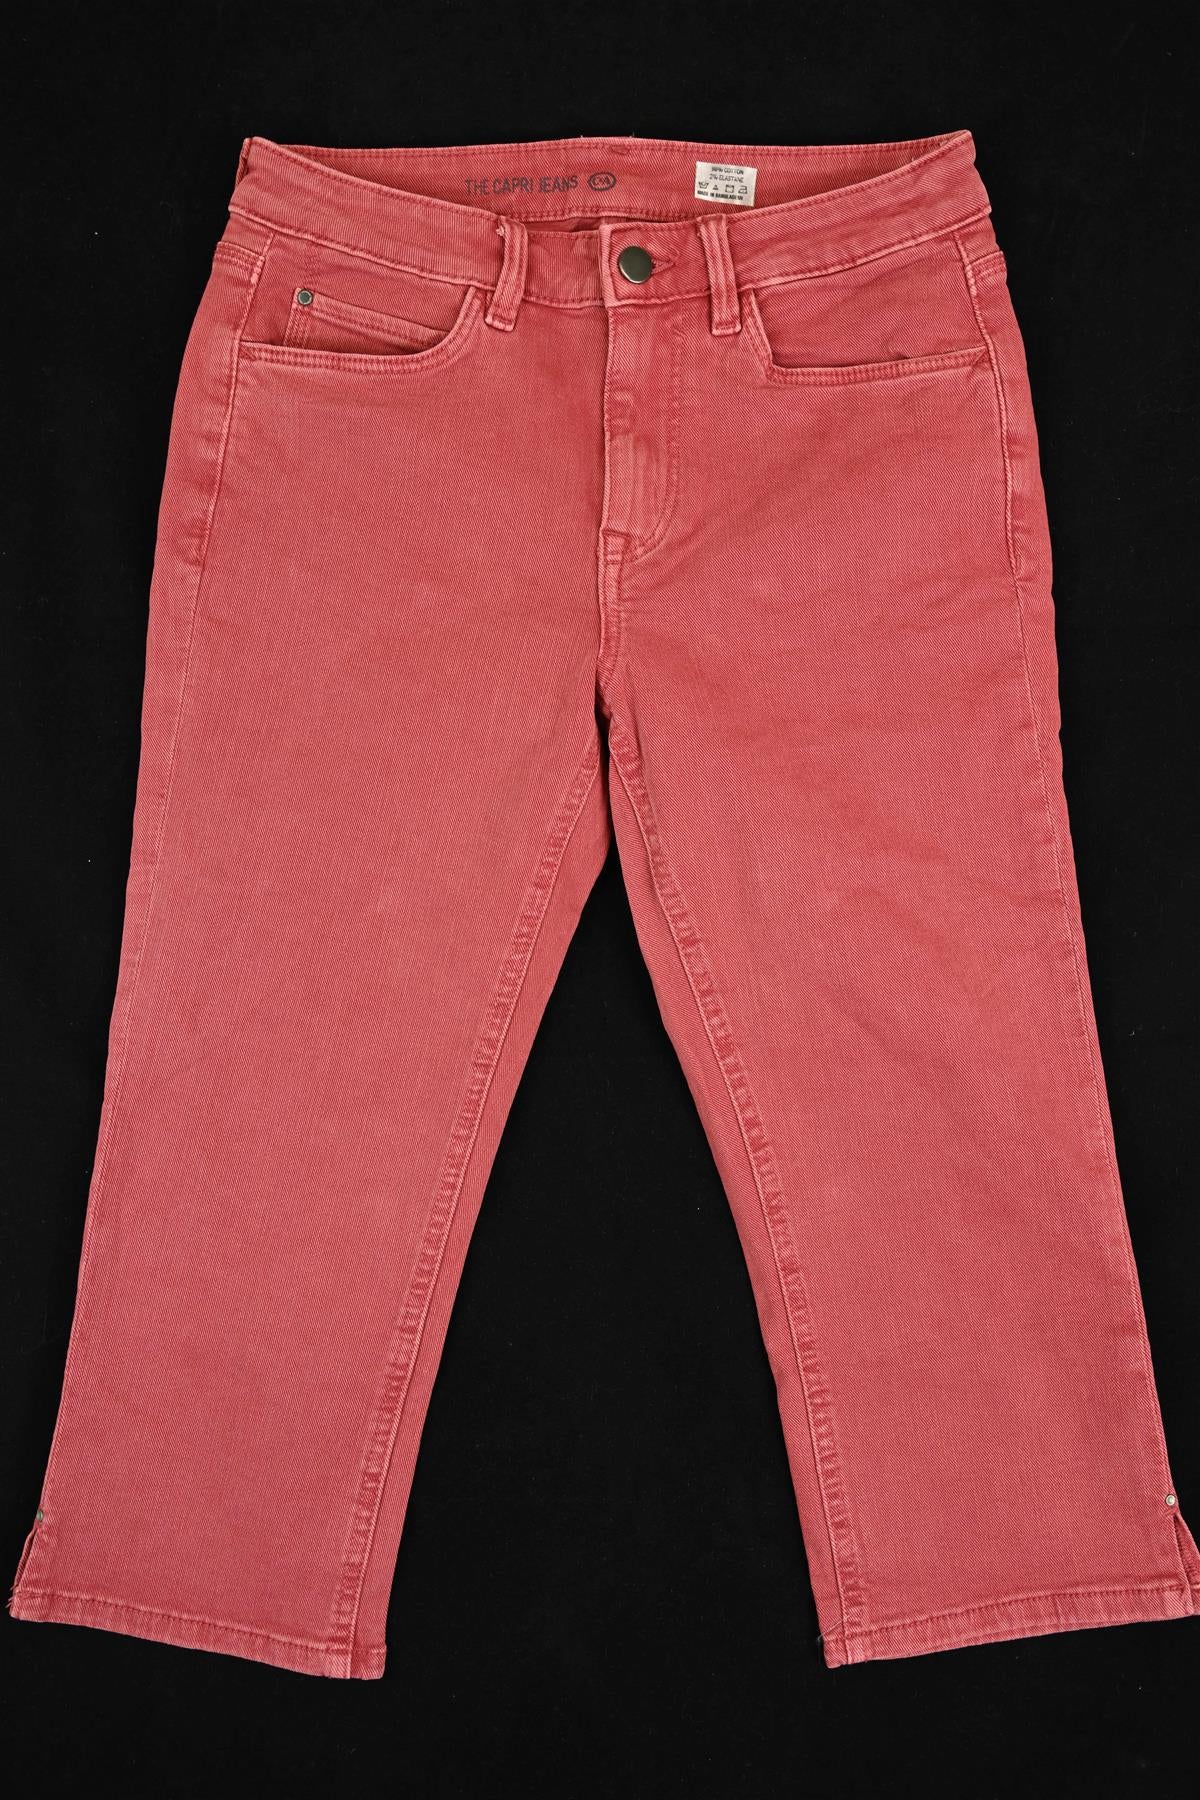 C&A Women's Capri Jeans Cotton Red Maroon Stretch Denim Trousers Brand New